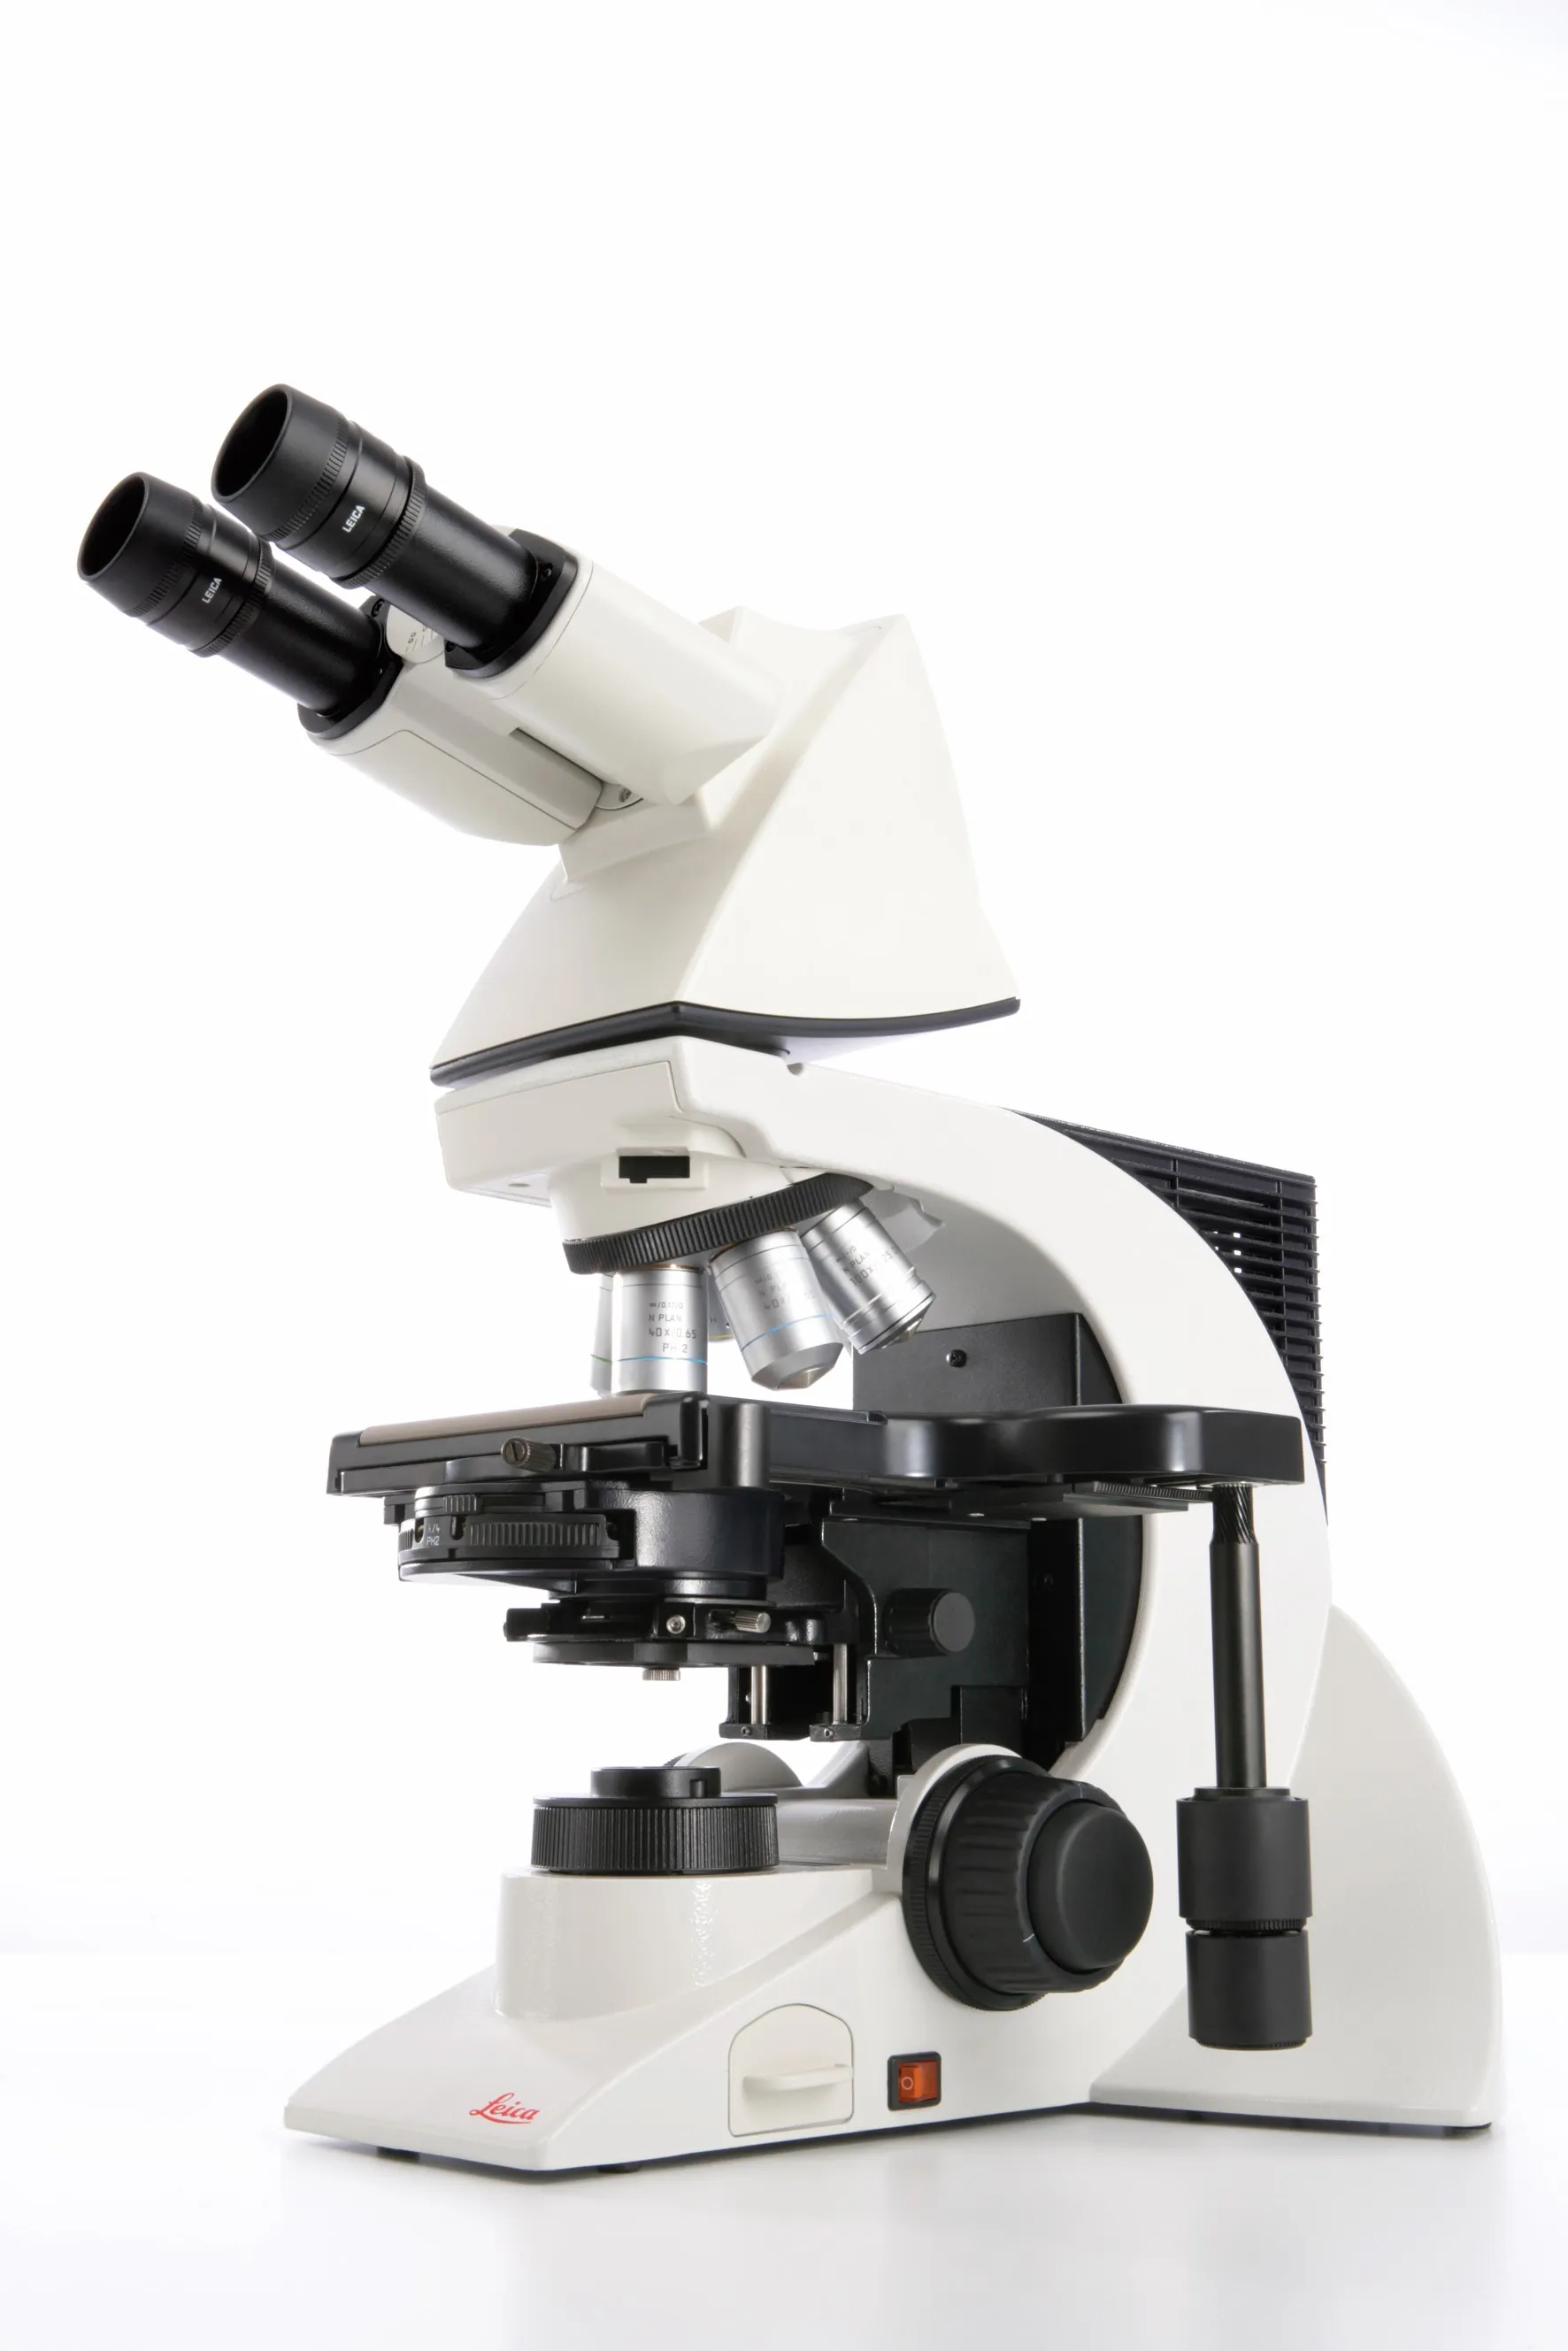 Leica DM2000 Ergonomic System Microscopes for Complex Clinical Applications